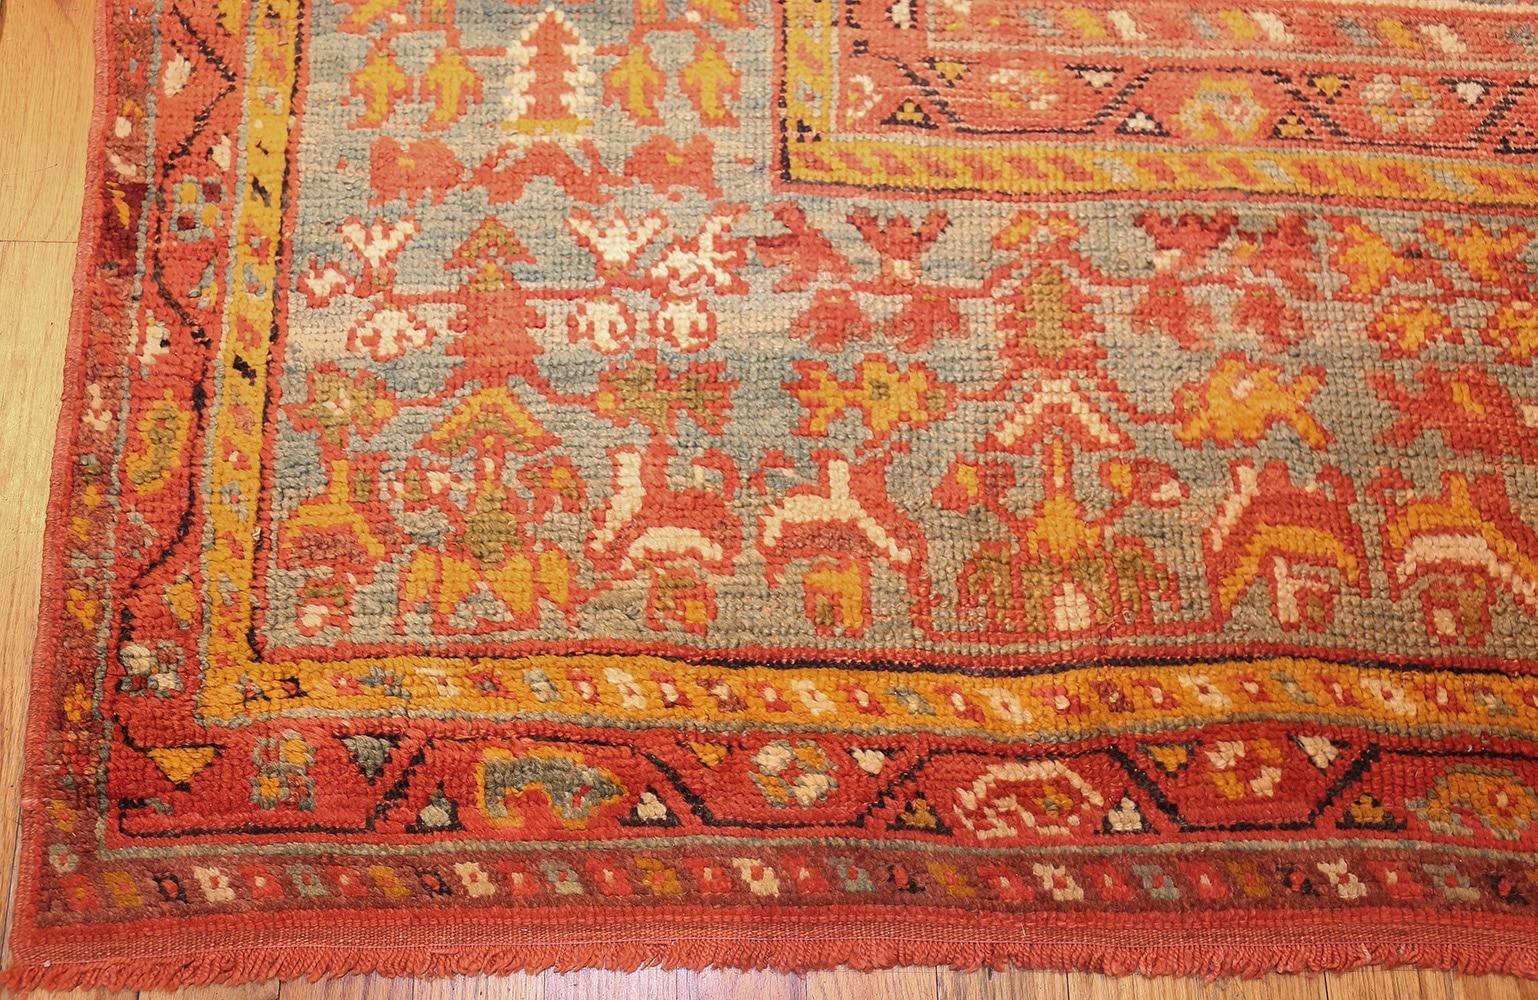 Hand-Knotted Antique Turkish Oushak Carpet. Size: 12 ft x 16 ft (3.66 m x 4.88 m)